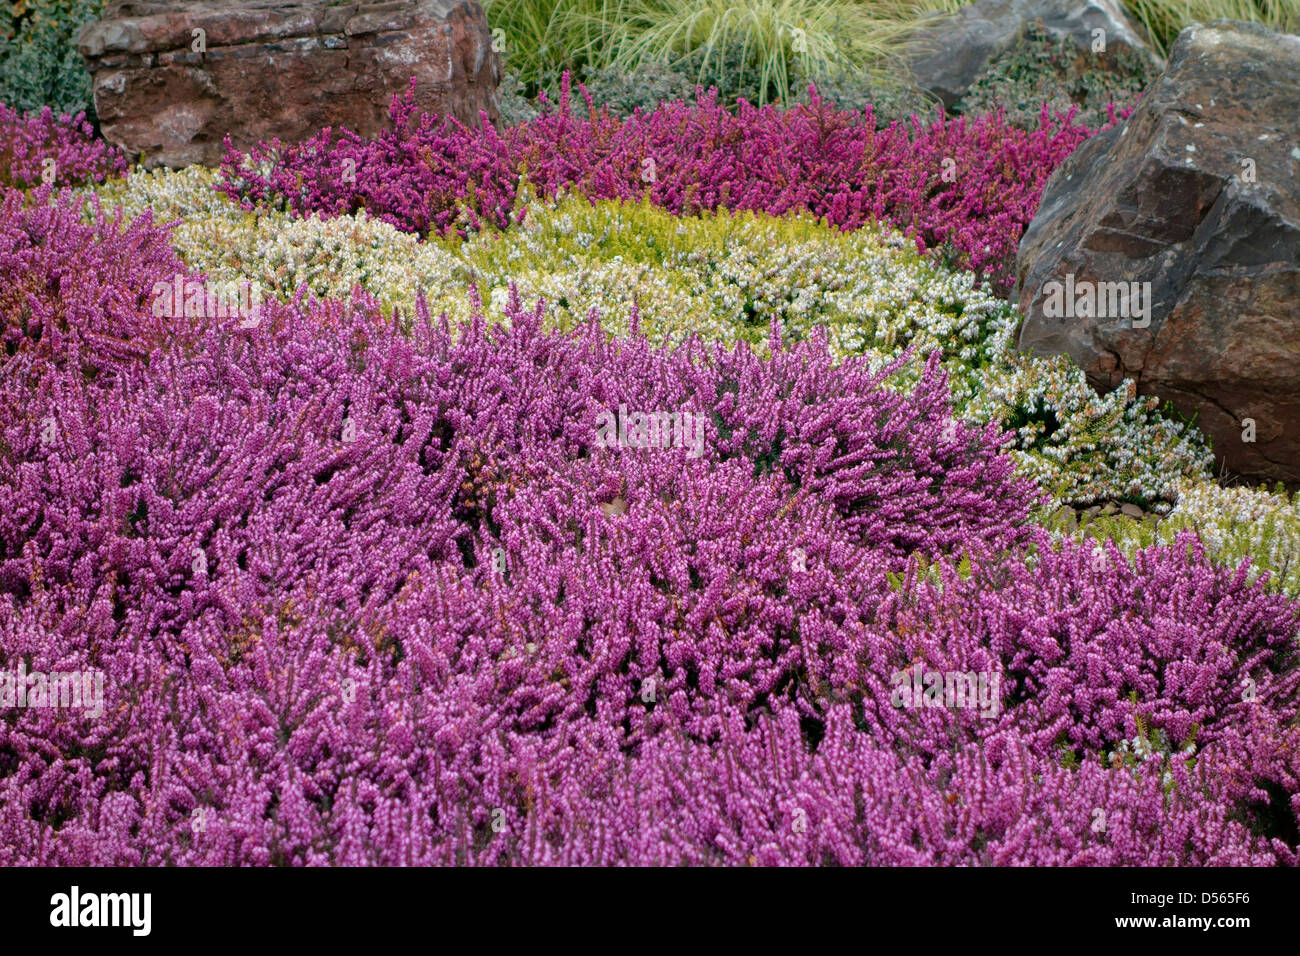 Erica carnea cultivars - Winter flowering heathers used in amenity plantings among boulders Stock Photo